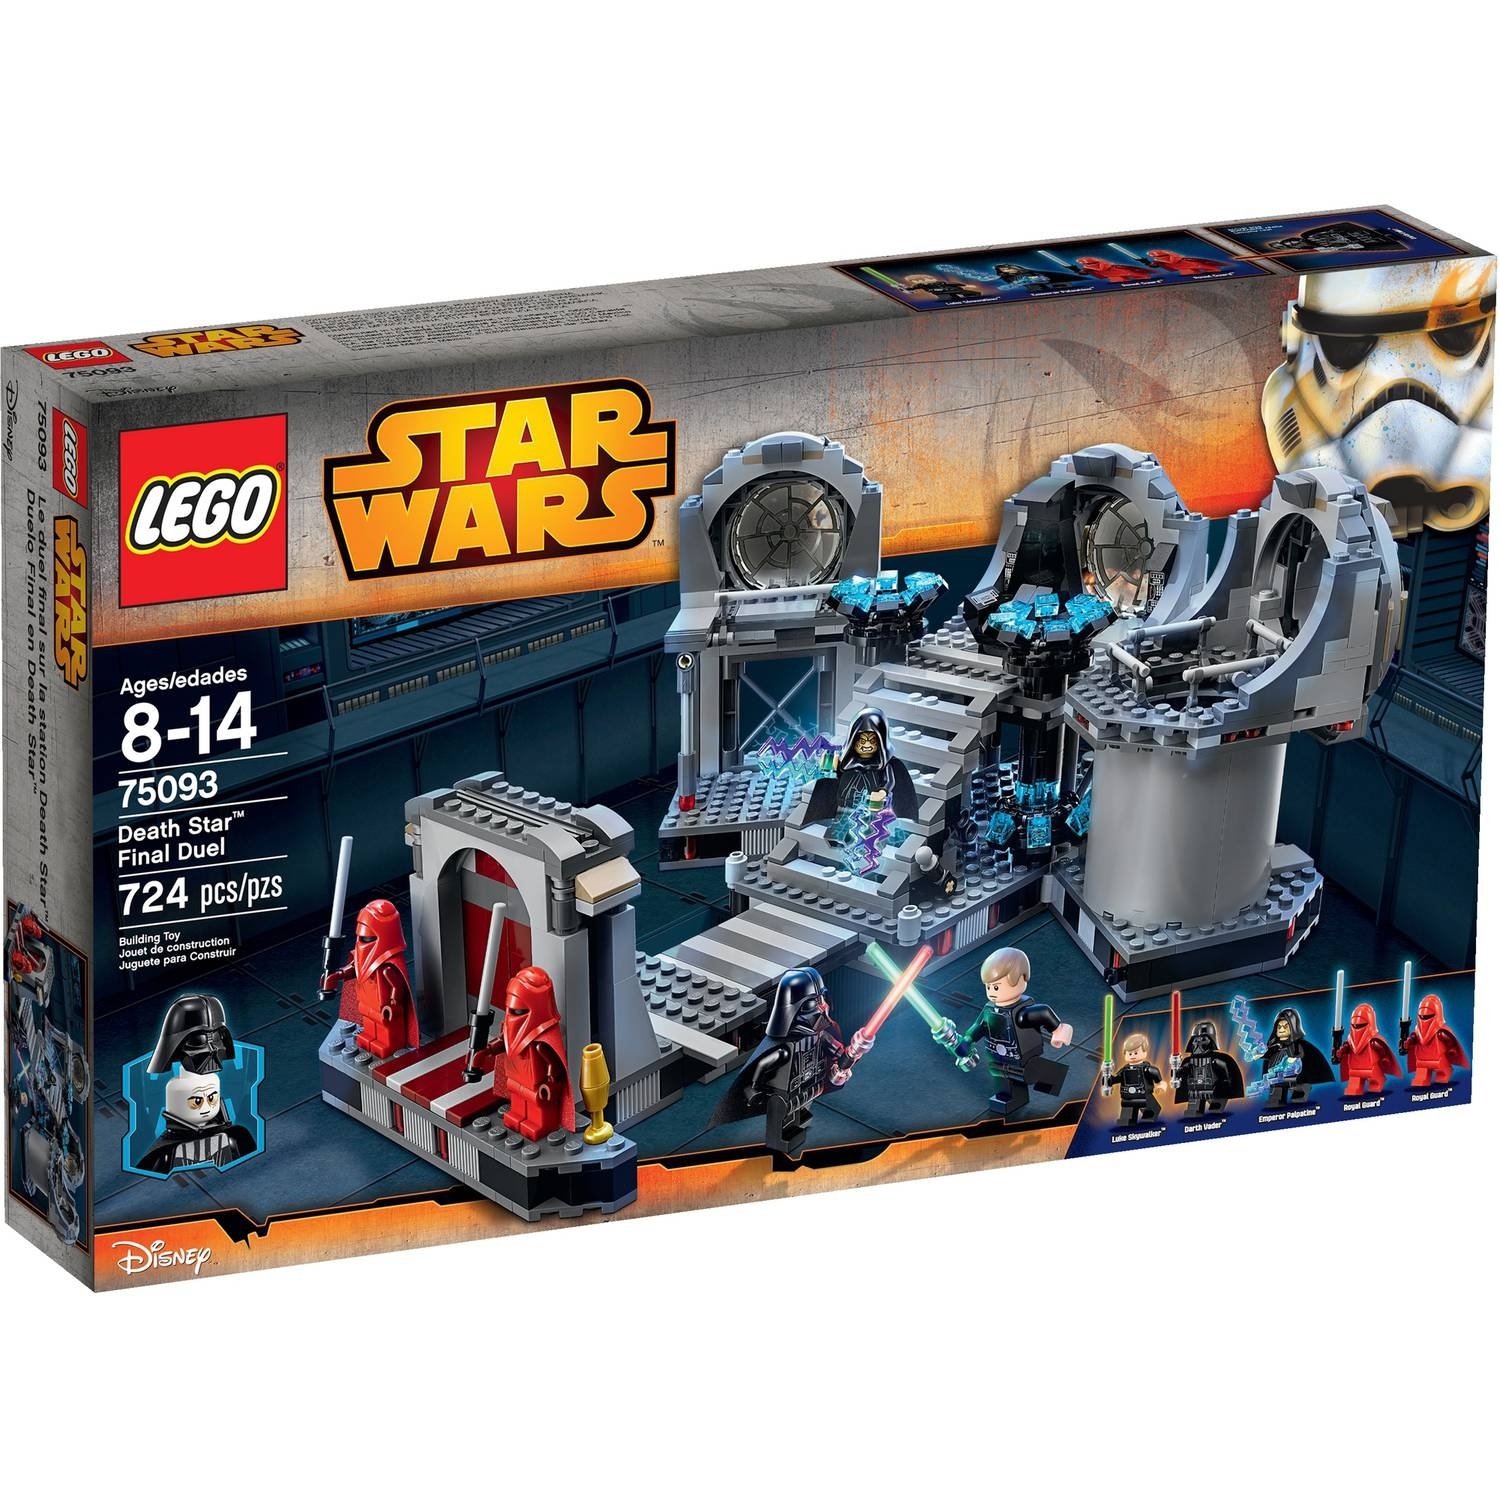 Lego Star Wars Death Star Final Duel - Walmart with Star Wars Lego Sets Codes